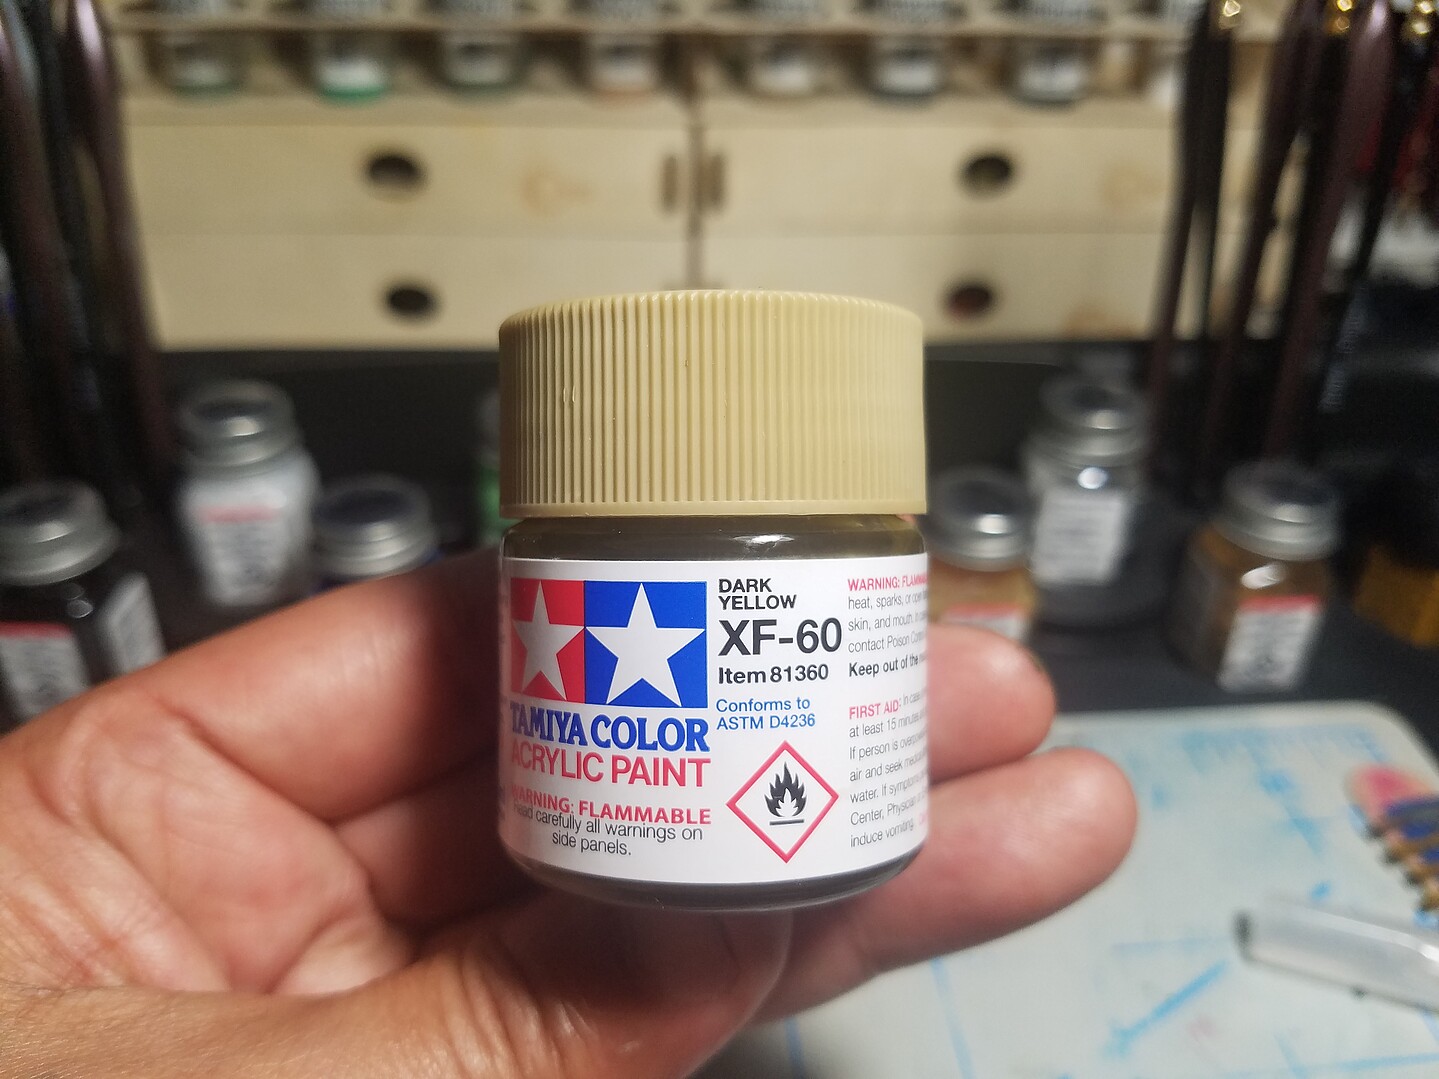 TAMIYA #81351: XF-51 Flat KHAKI DRAB Acrylic Plastic Model Paint, 23 ml  Bottle